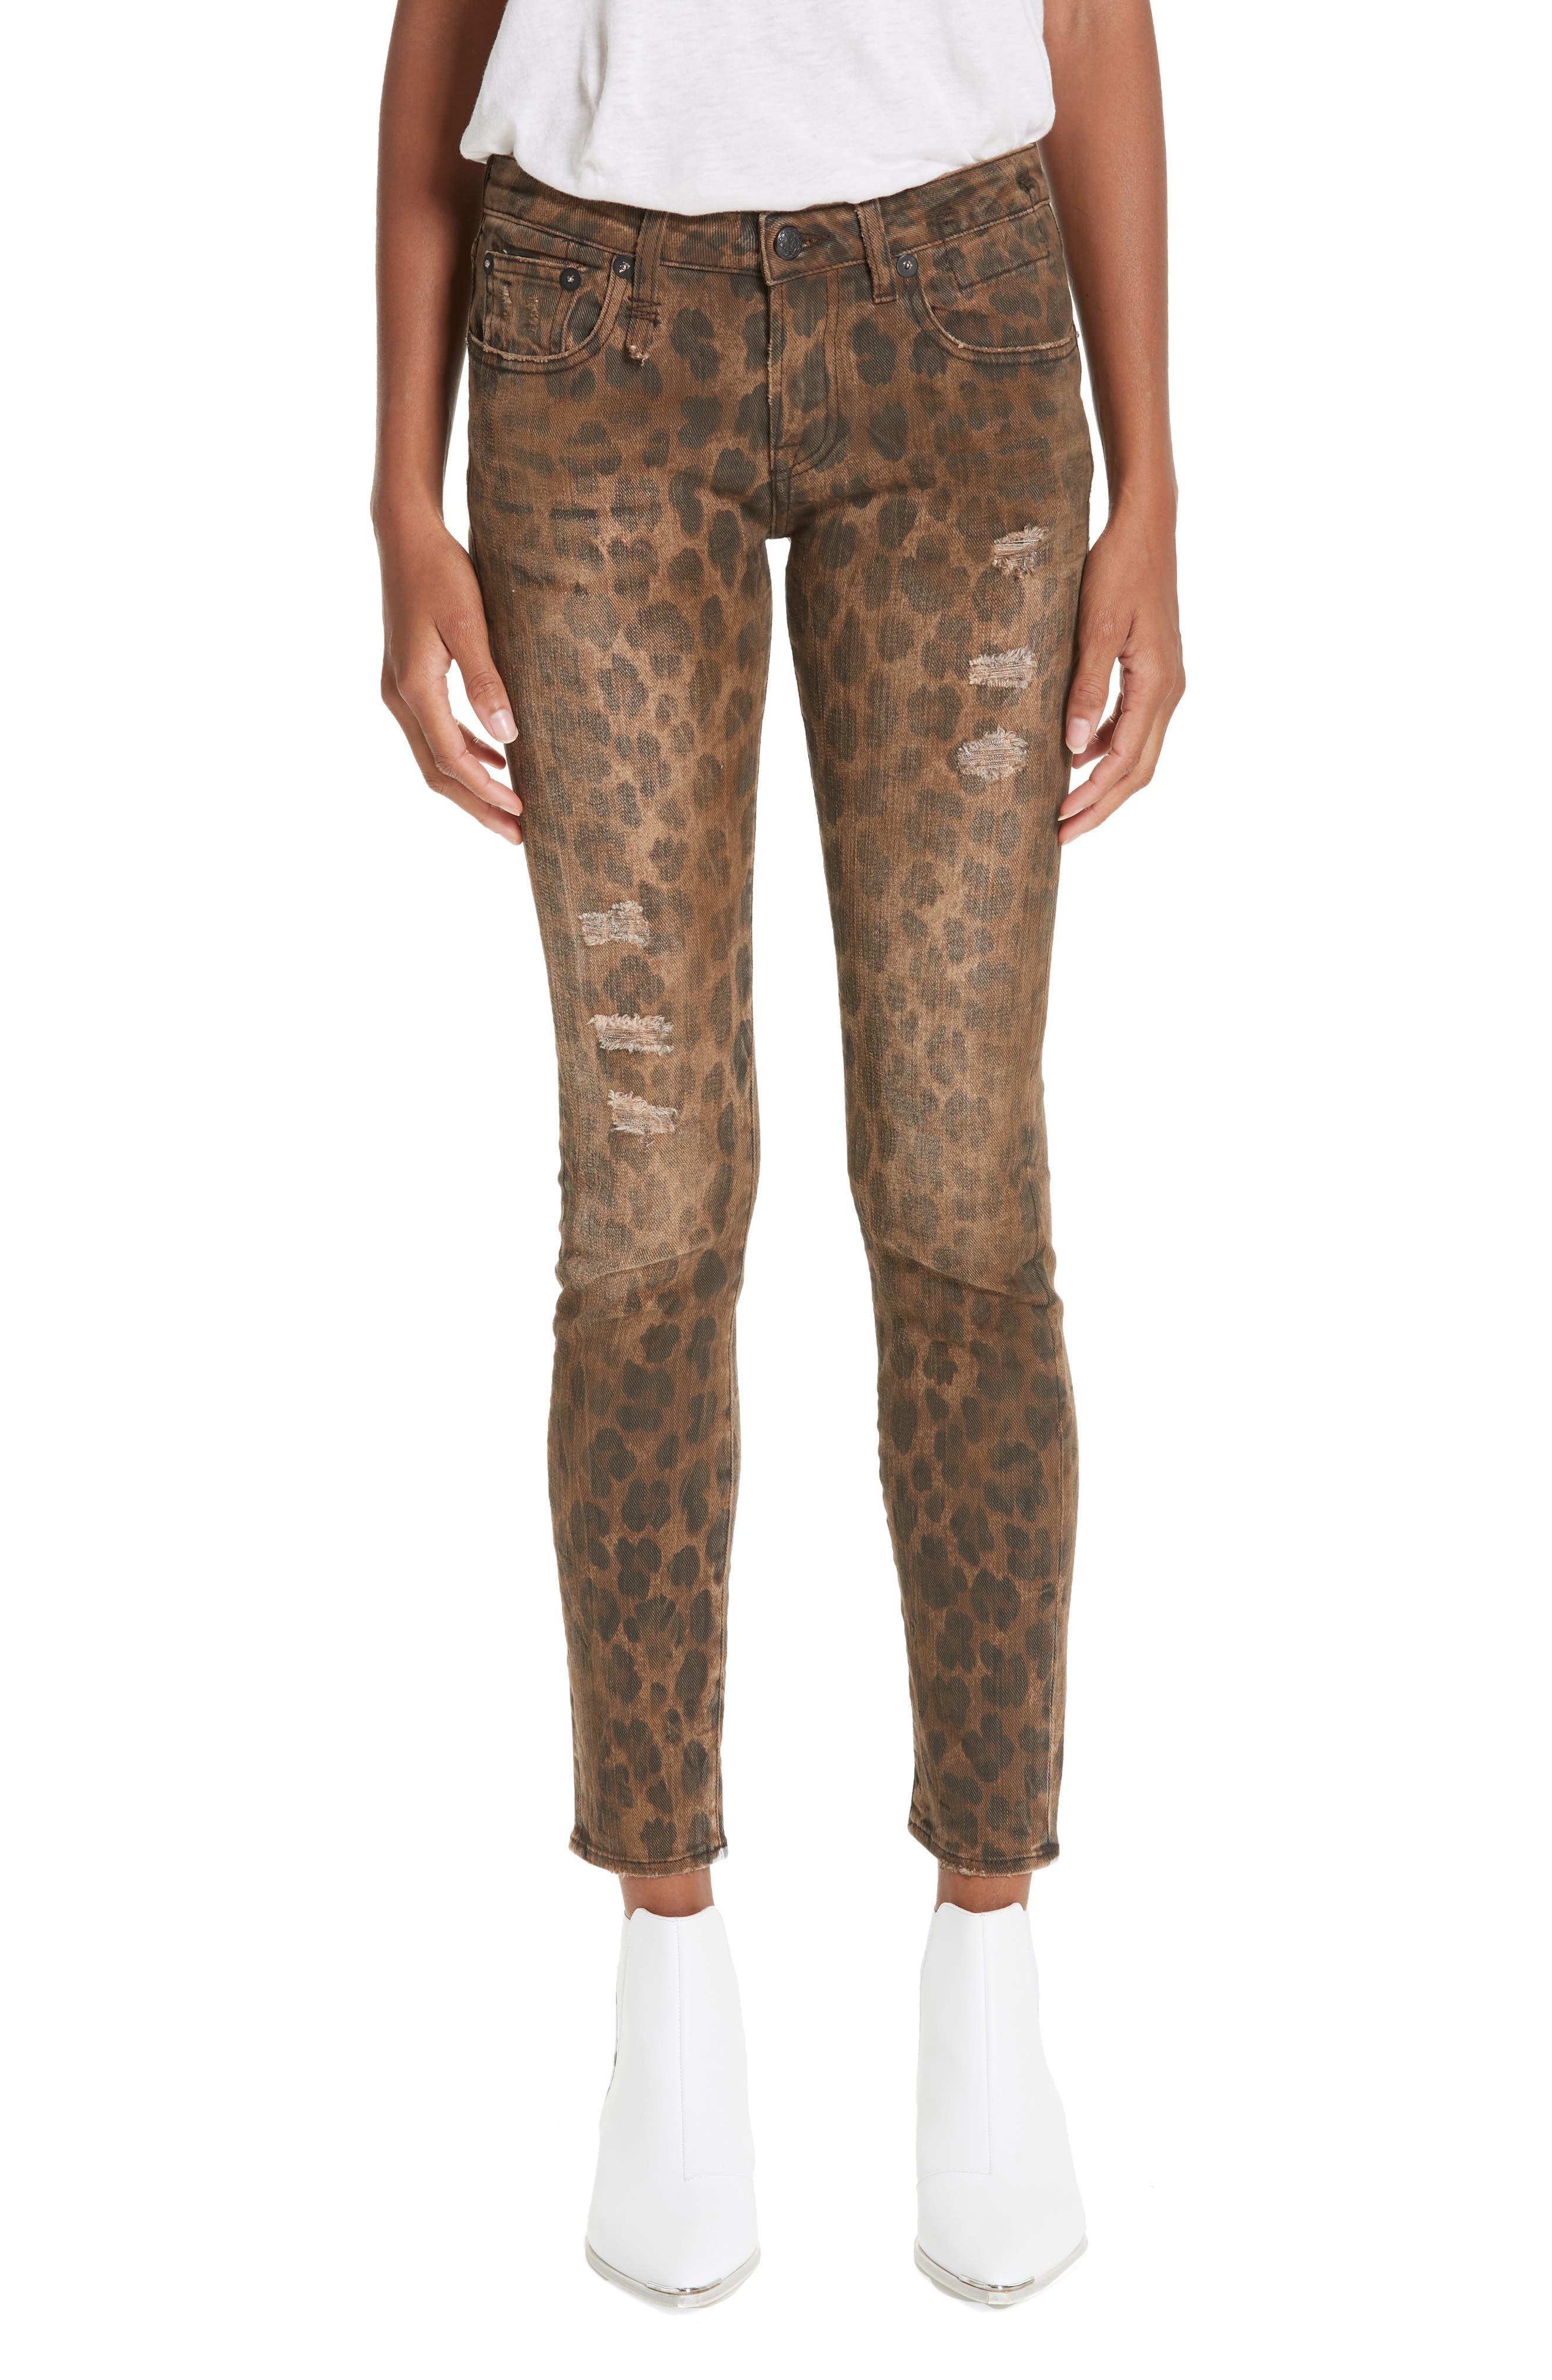 r13 leopard jeans